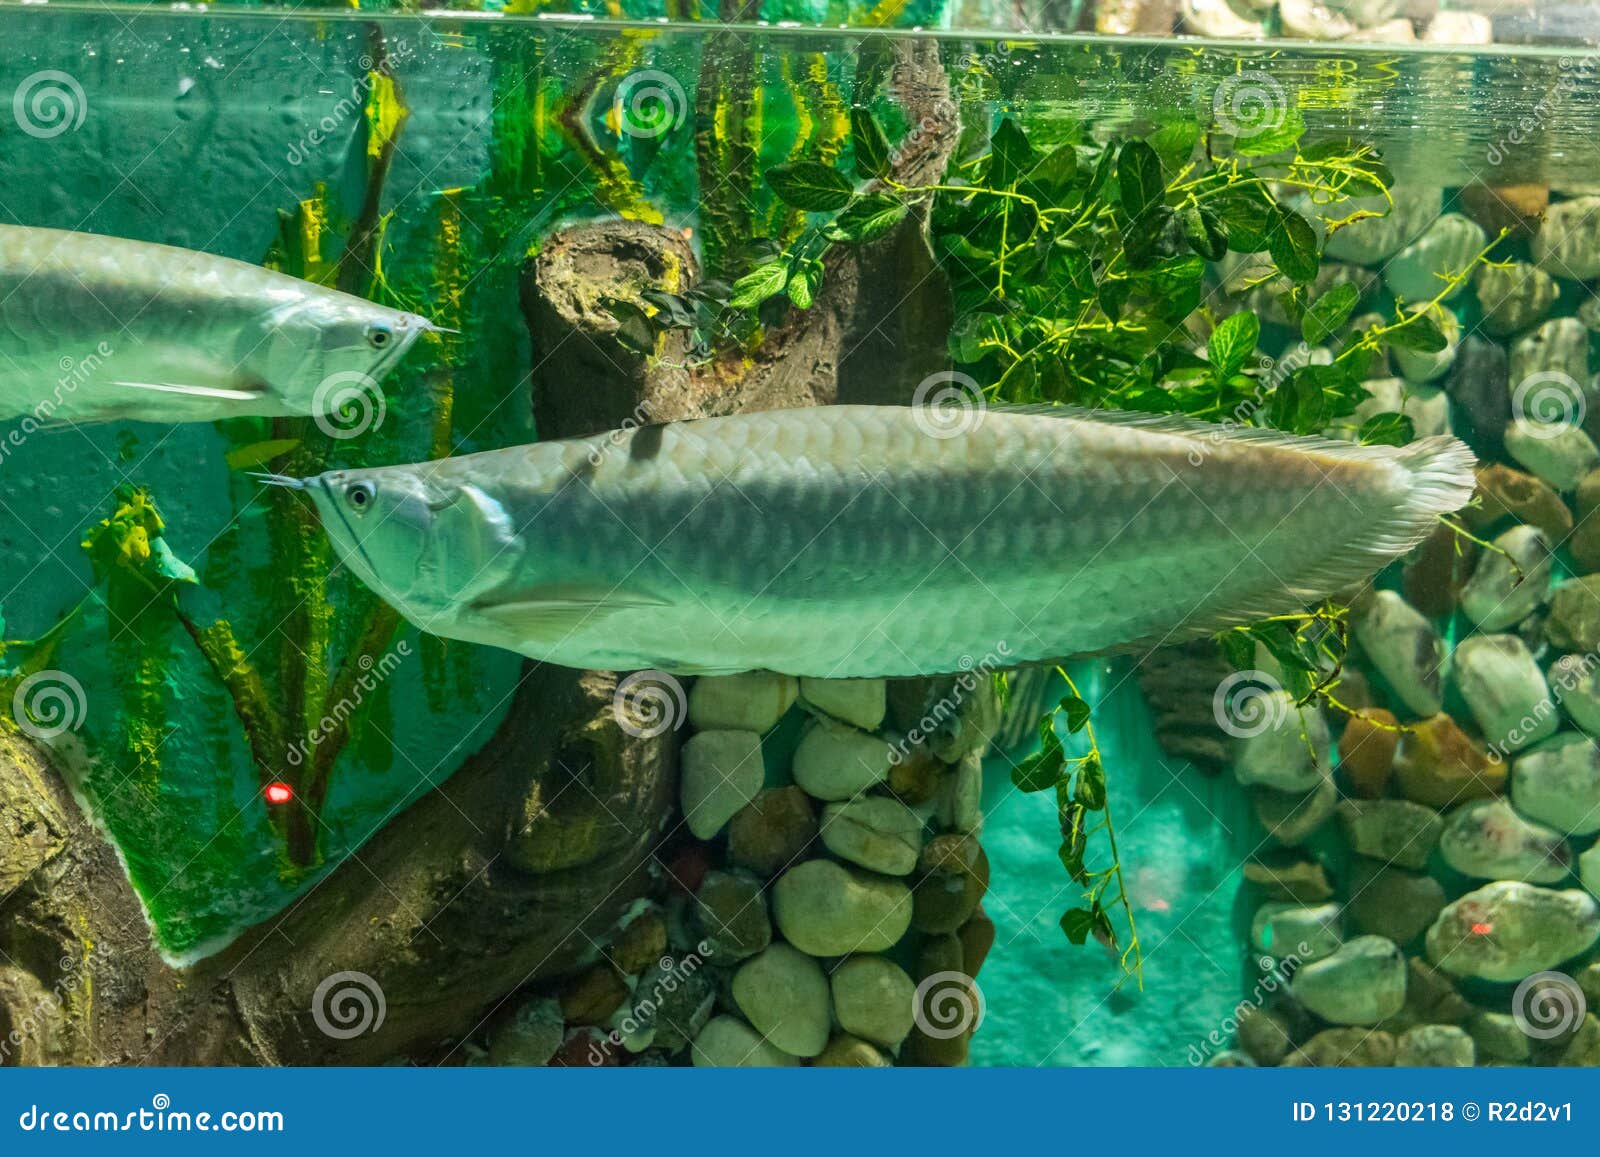 Big Fish Silver Arowana In Aquarium Stock Photo Image of 